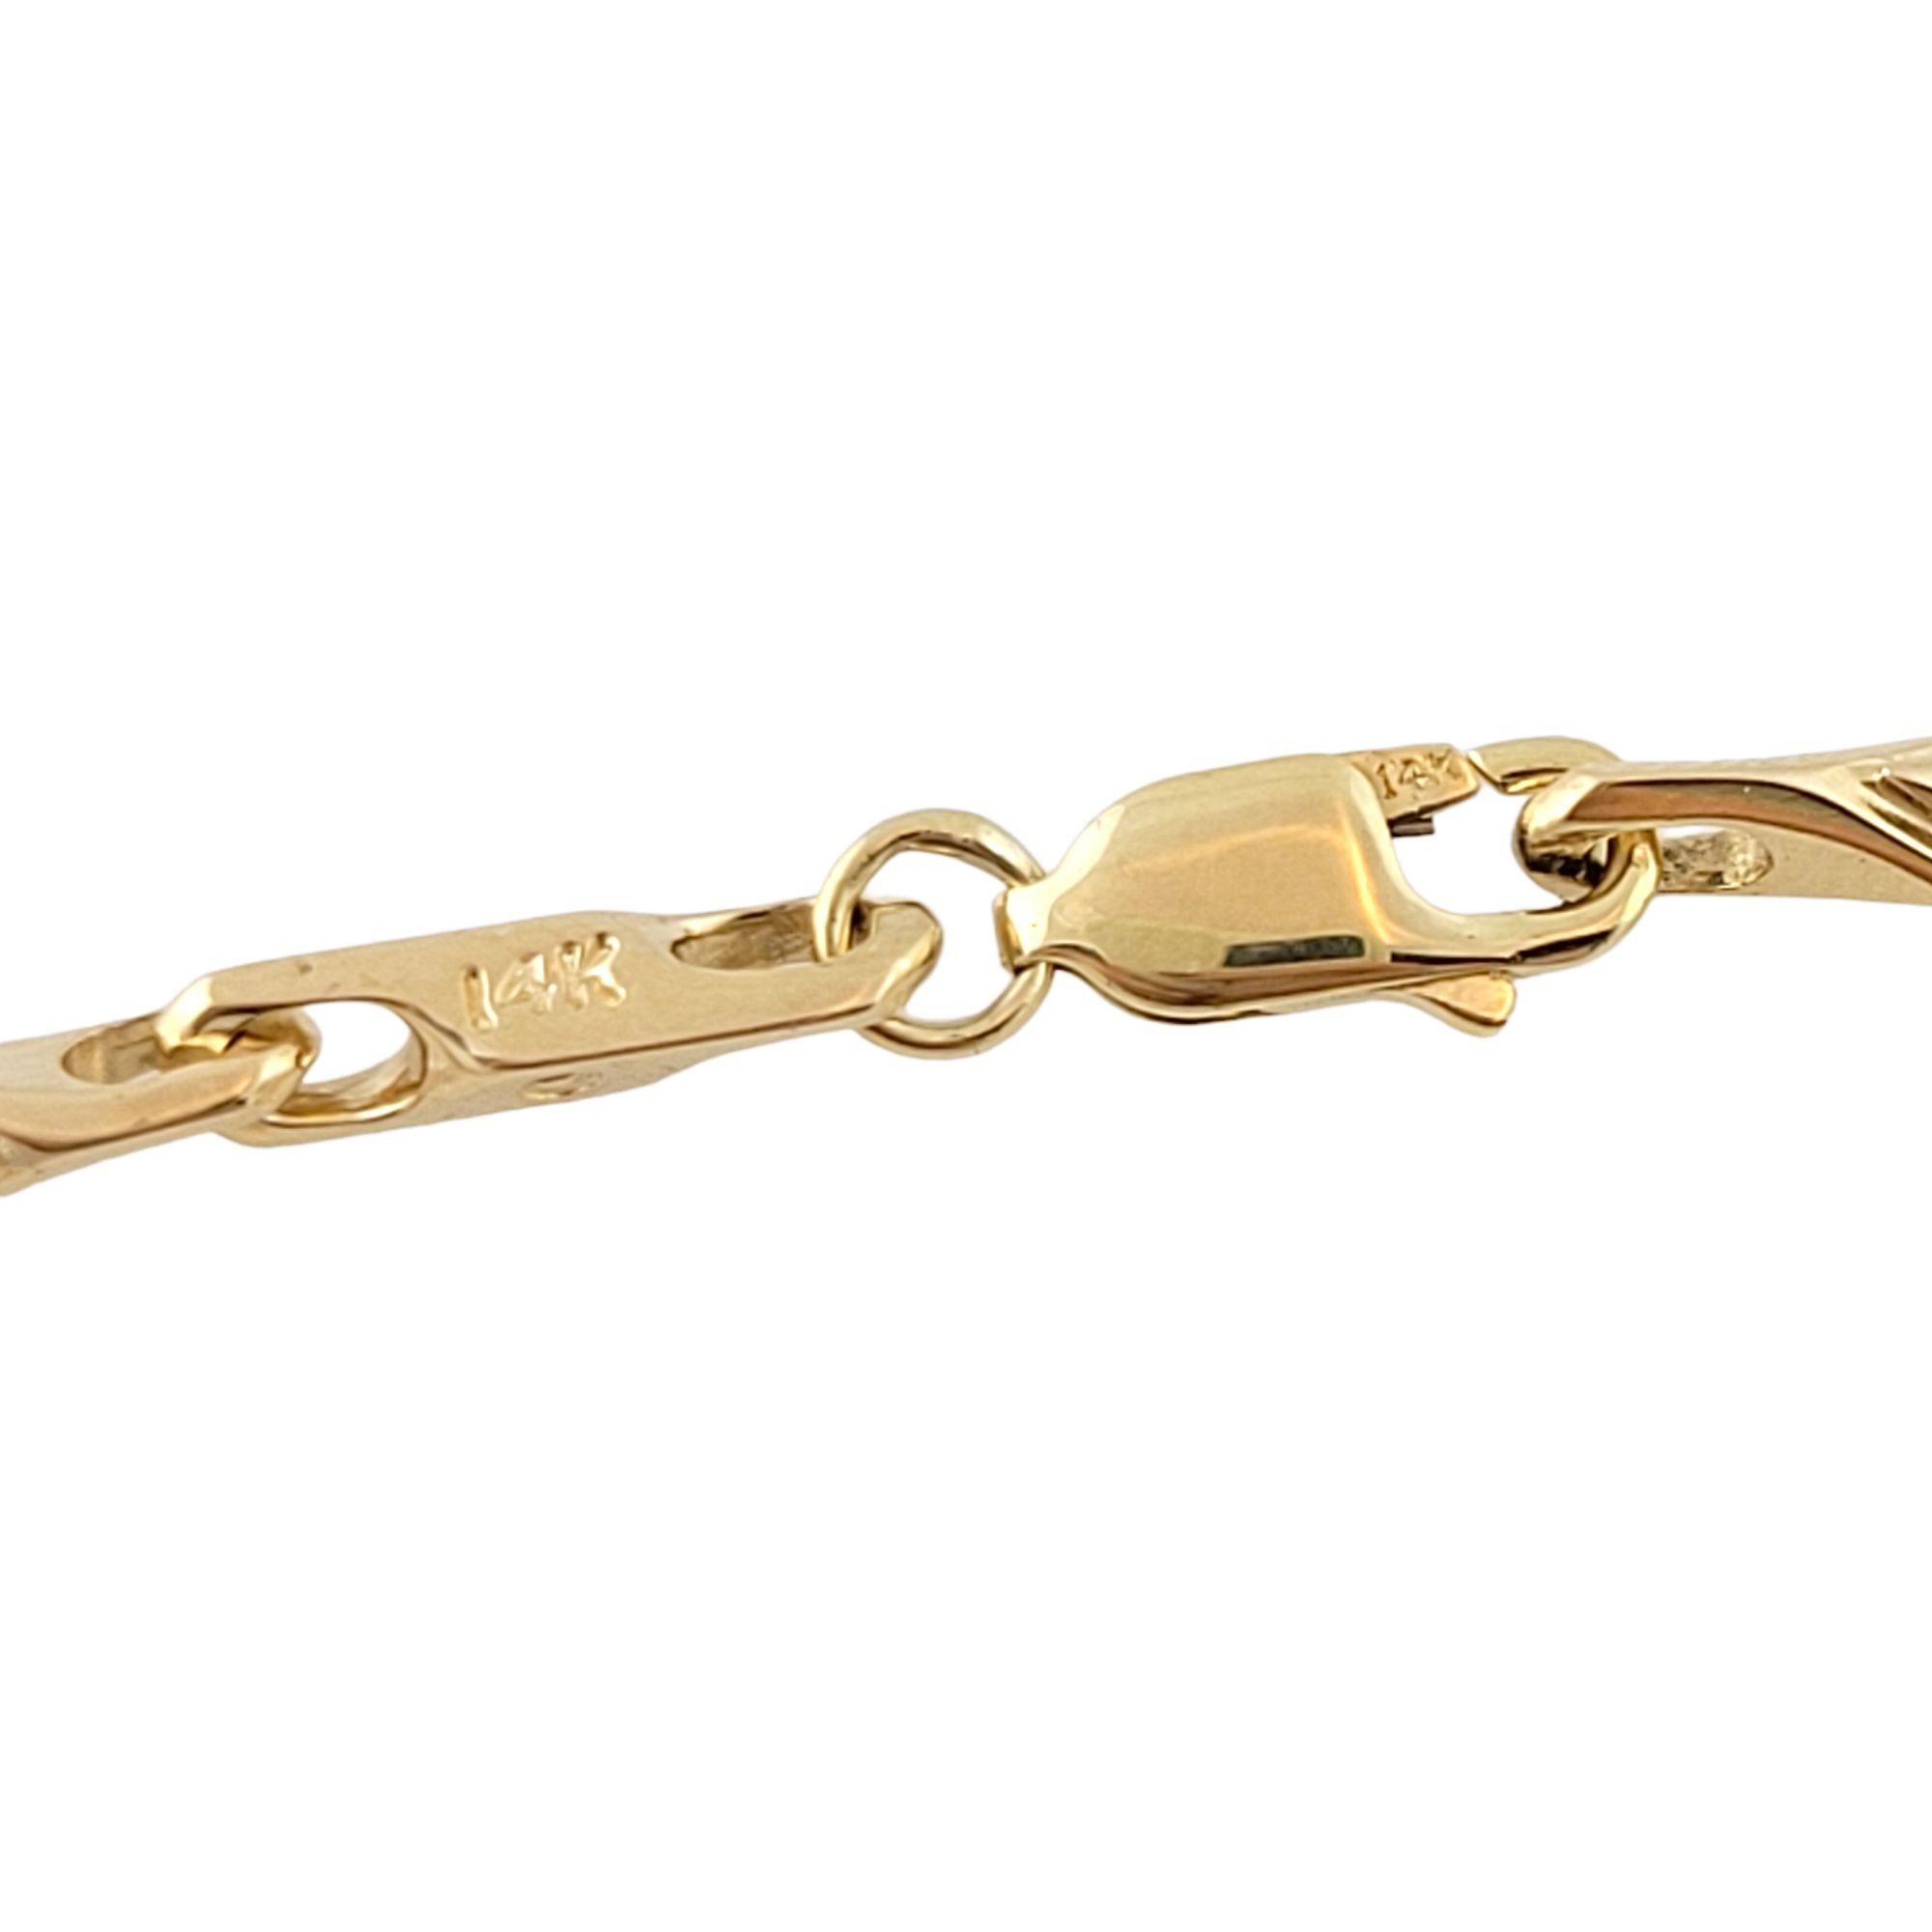 Vintage 14K Yellow Gold Bracelet

This beautiful 14K yellow gold bracelet would make the perfect gift!

Size: 7